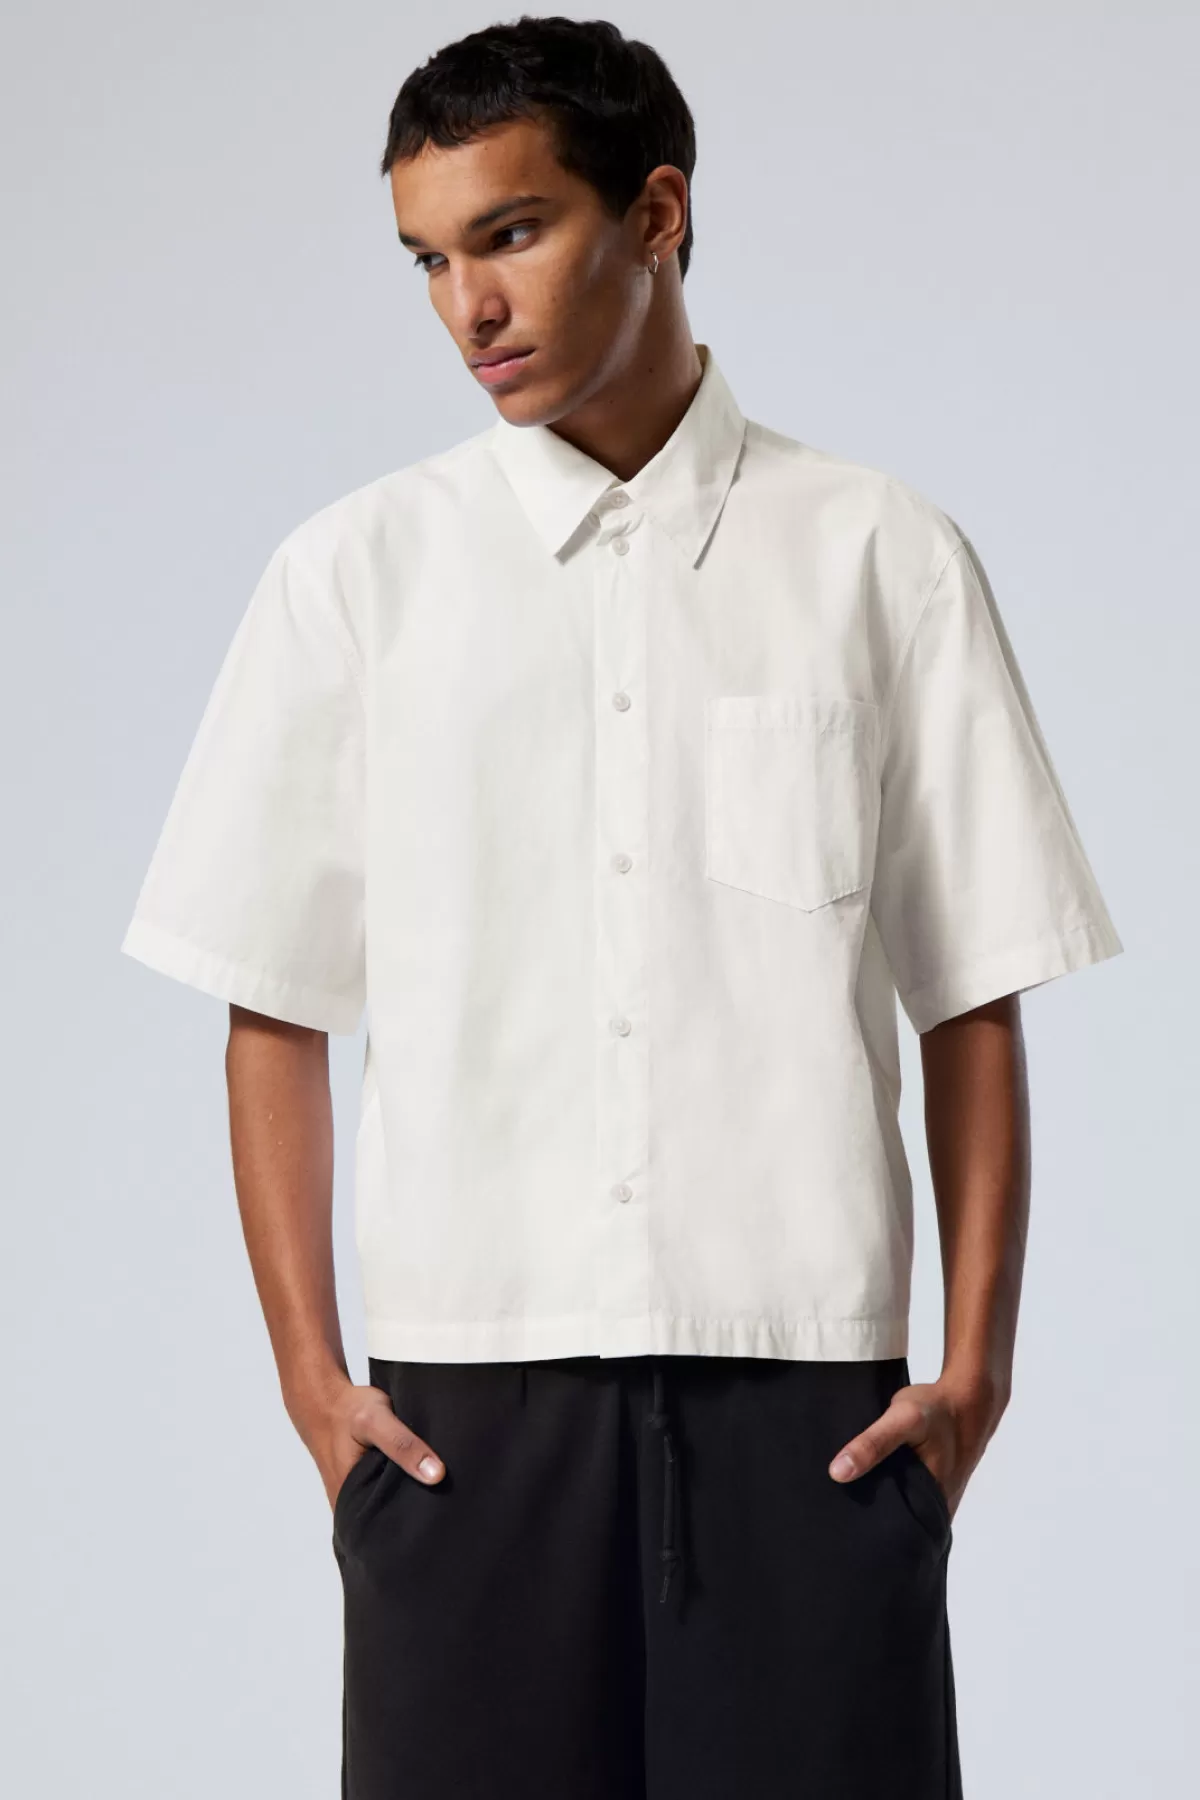 Weekday Cropped Short Sleeve Shirt White Cheap